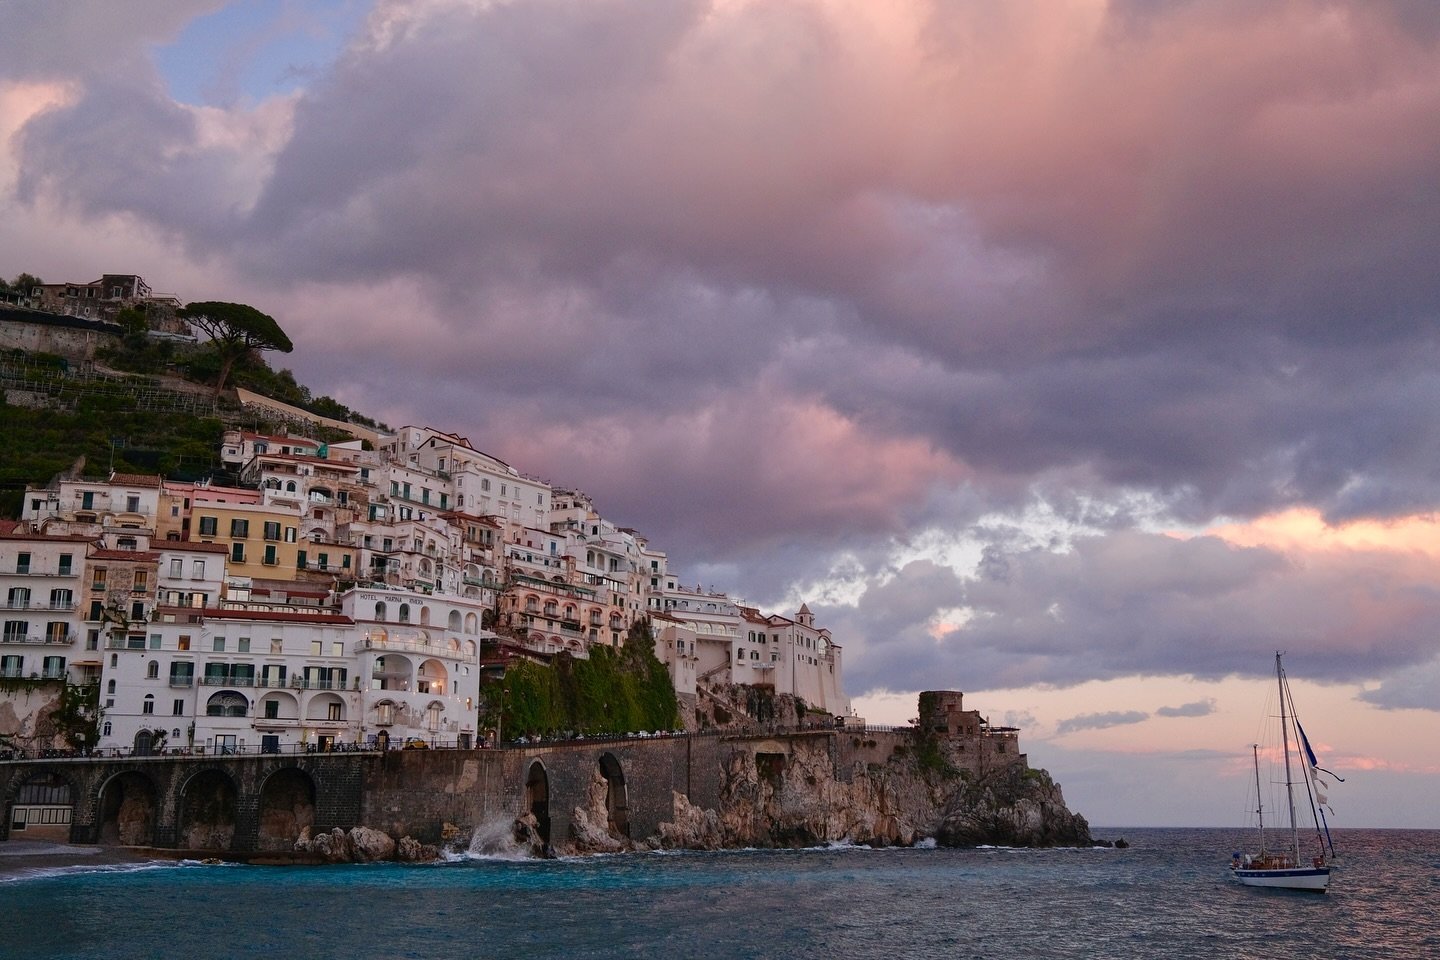 My last night on the Amalfi Coast, the clouds finally came out to play.

#italy #italia #amalfi #amalficoast